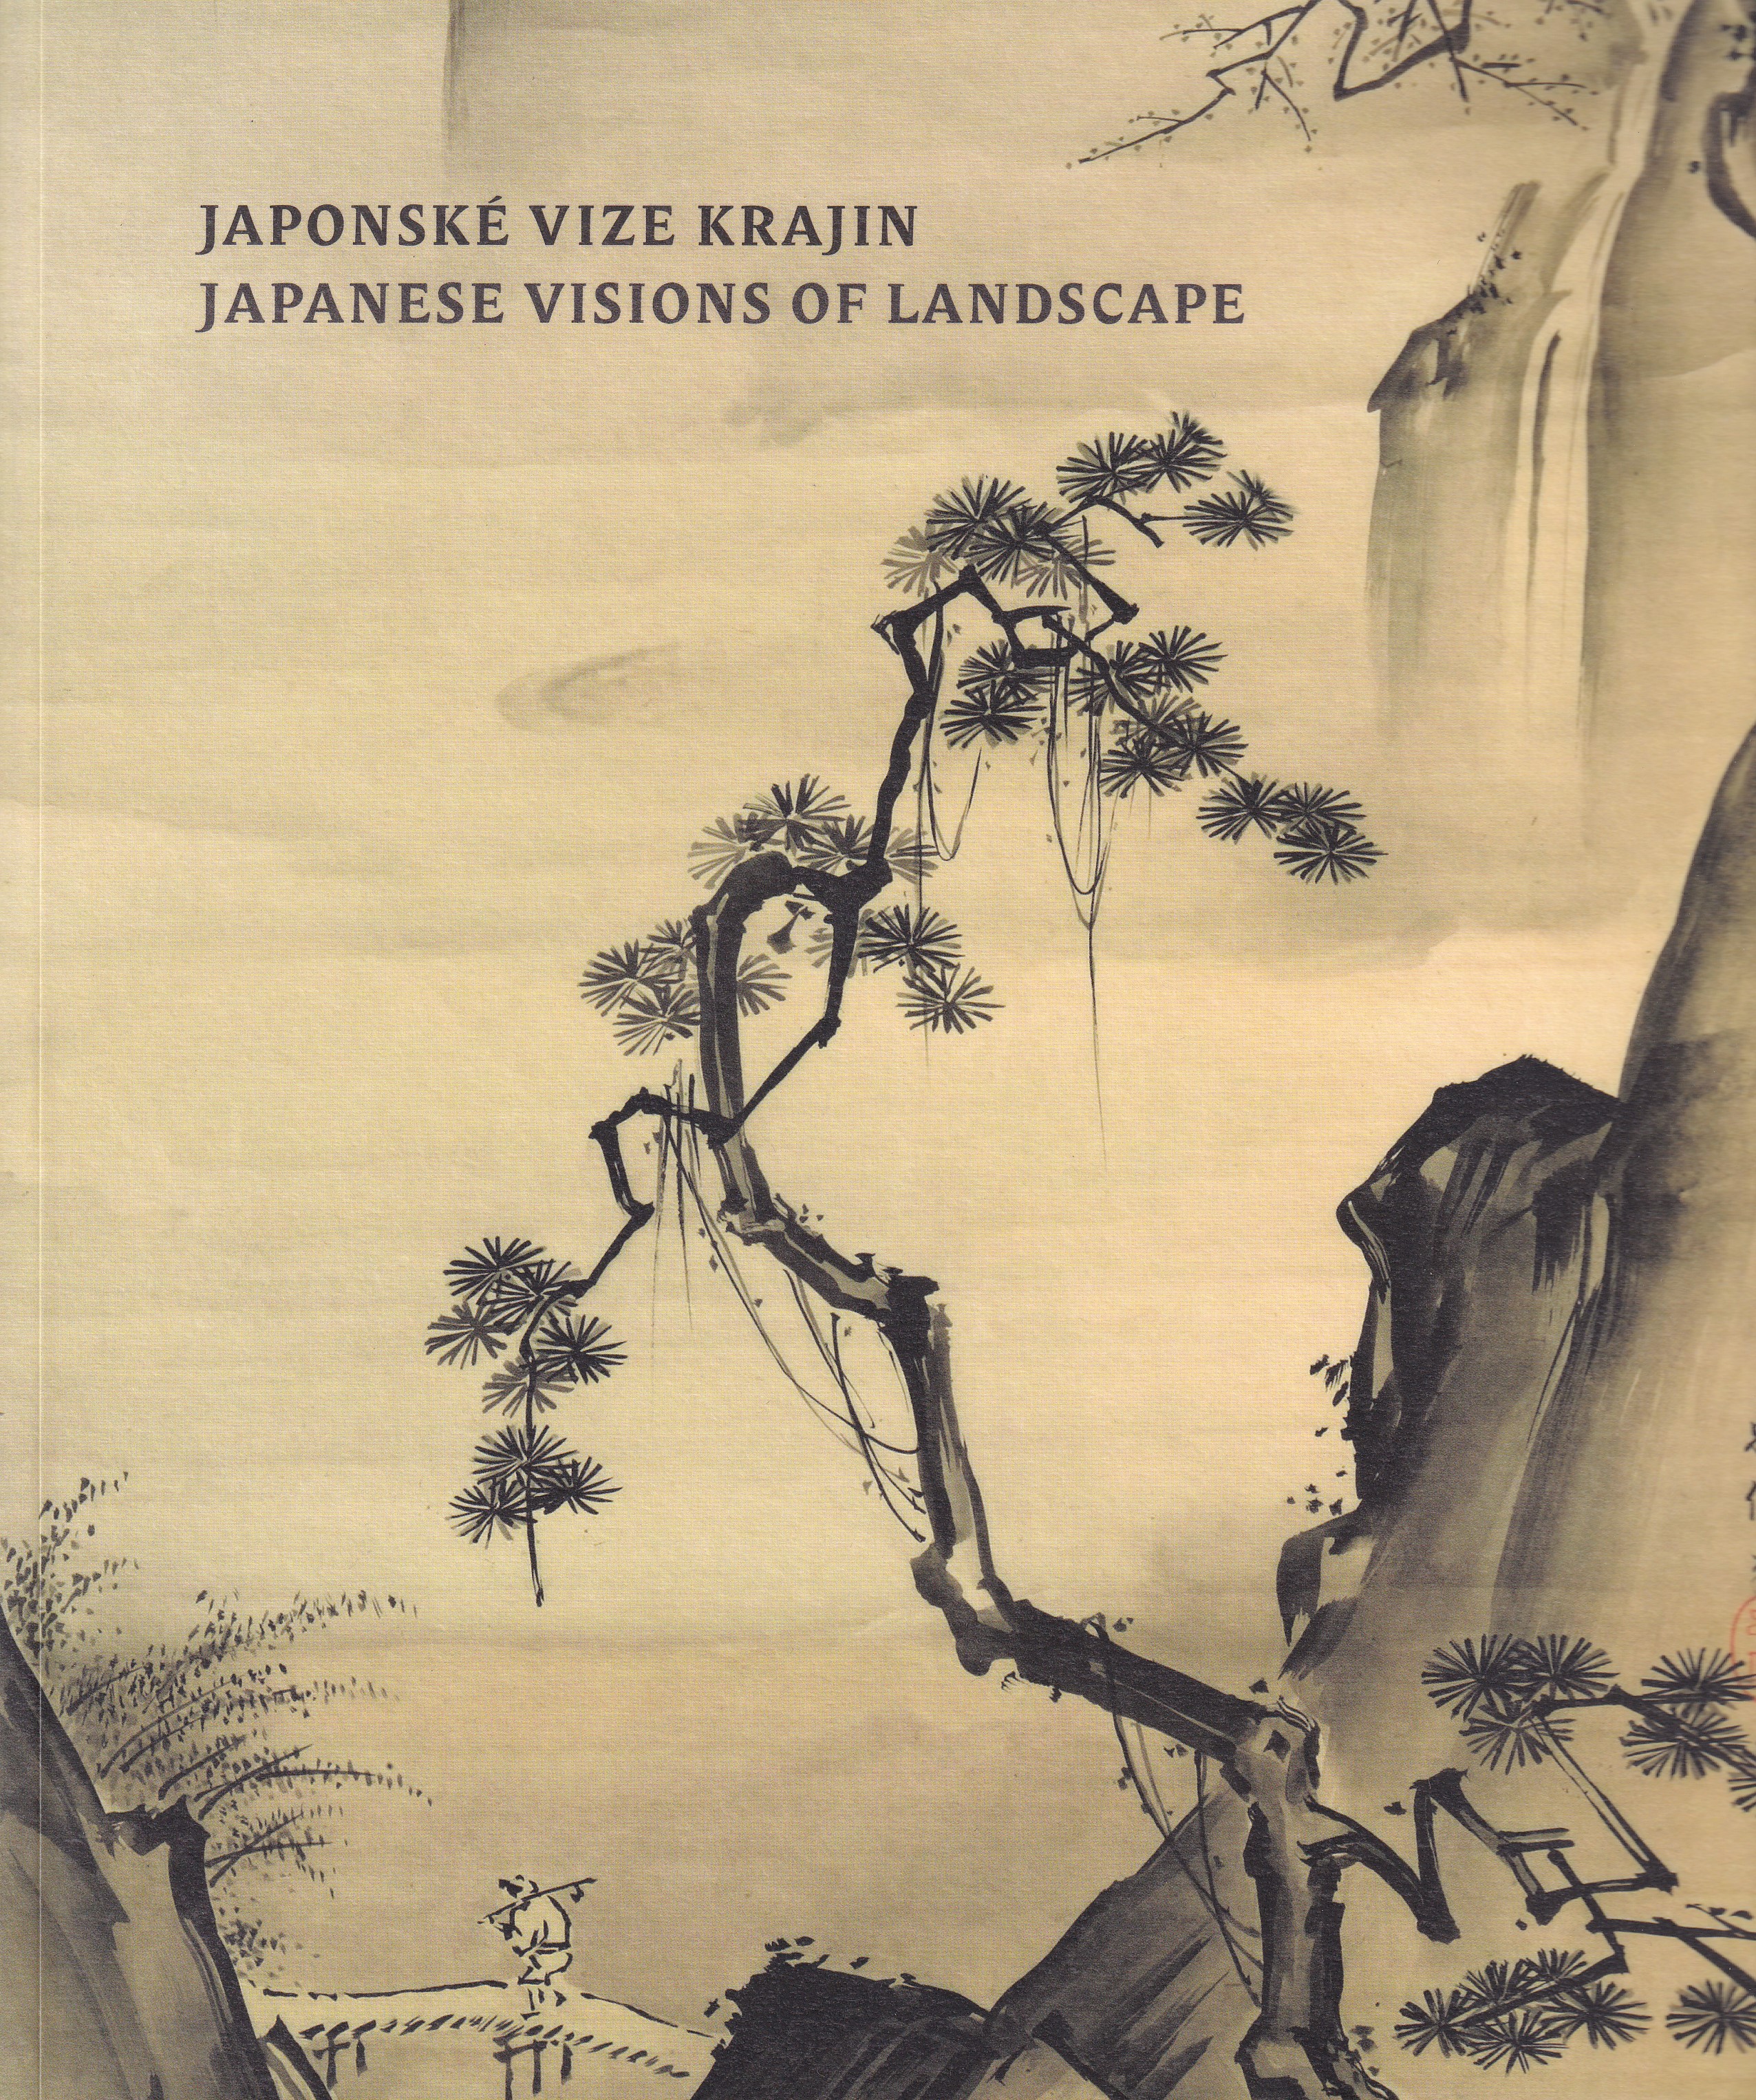 Japonské vize krajin = Japanese vision of landscape